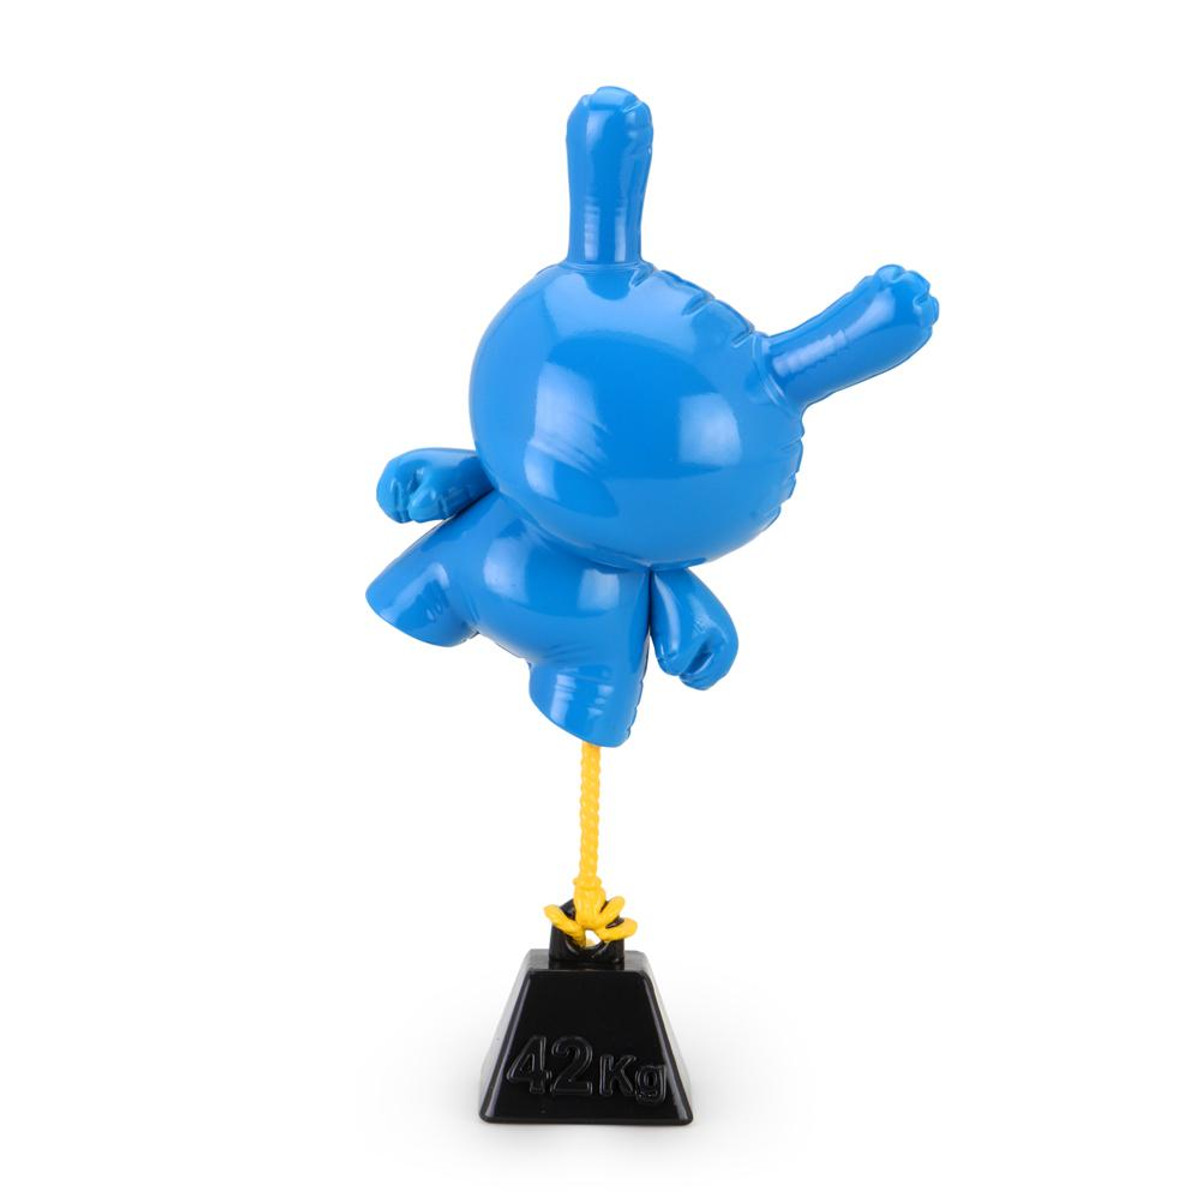 Balloon Dunny by Wendigo Toys x Kidrobot for Aug 2/2019 Drop